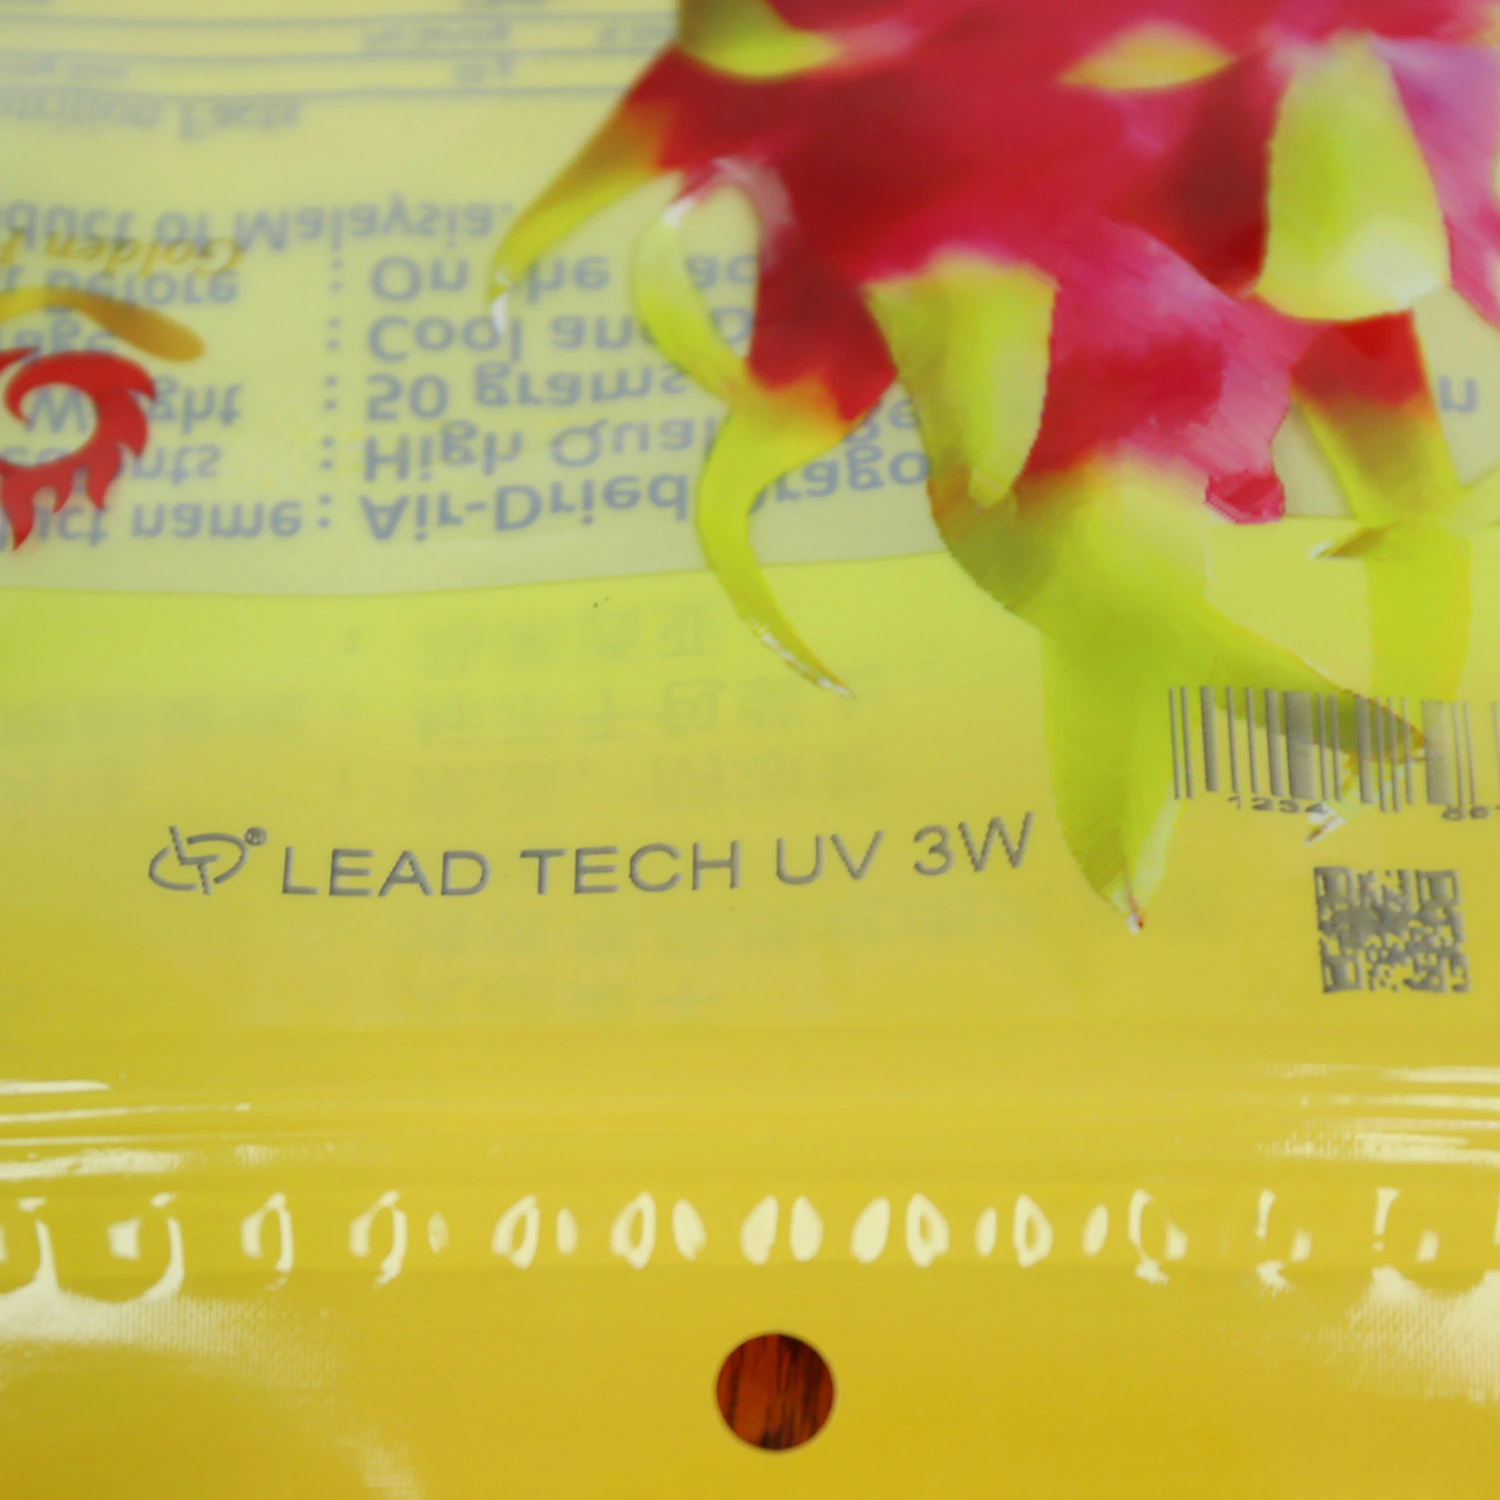 Lt8003u/Lt8005u UV High Performance Digital Plastic Bag Laser Printer